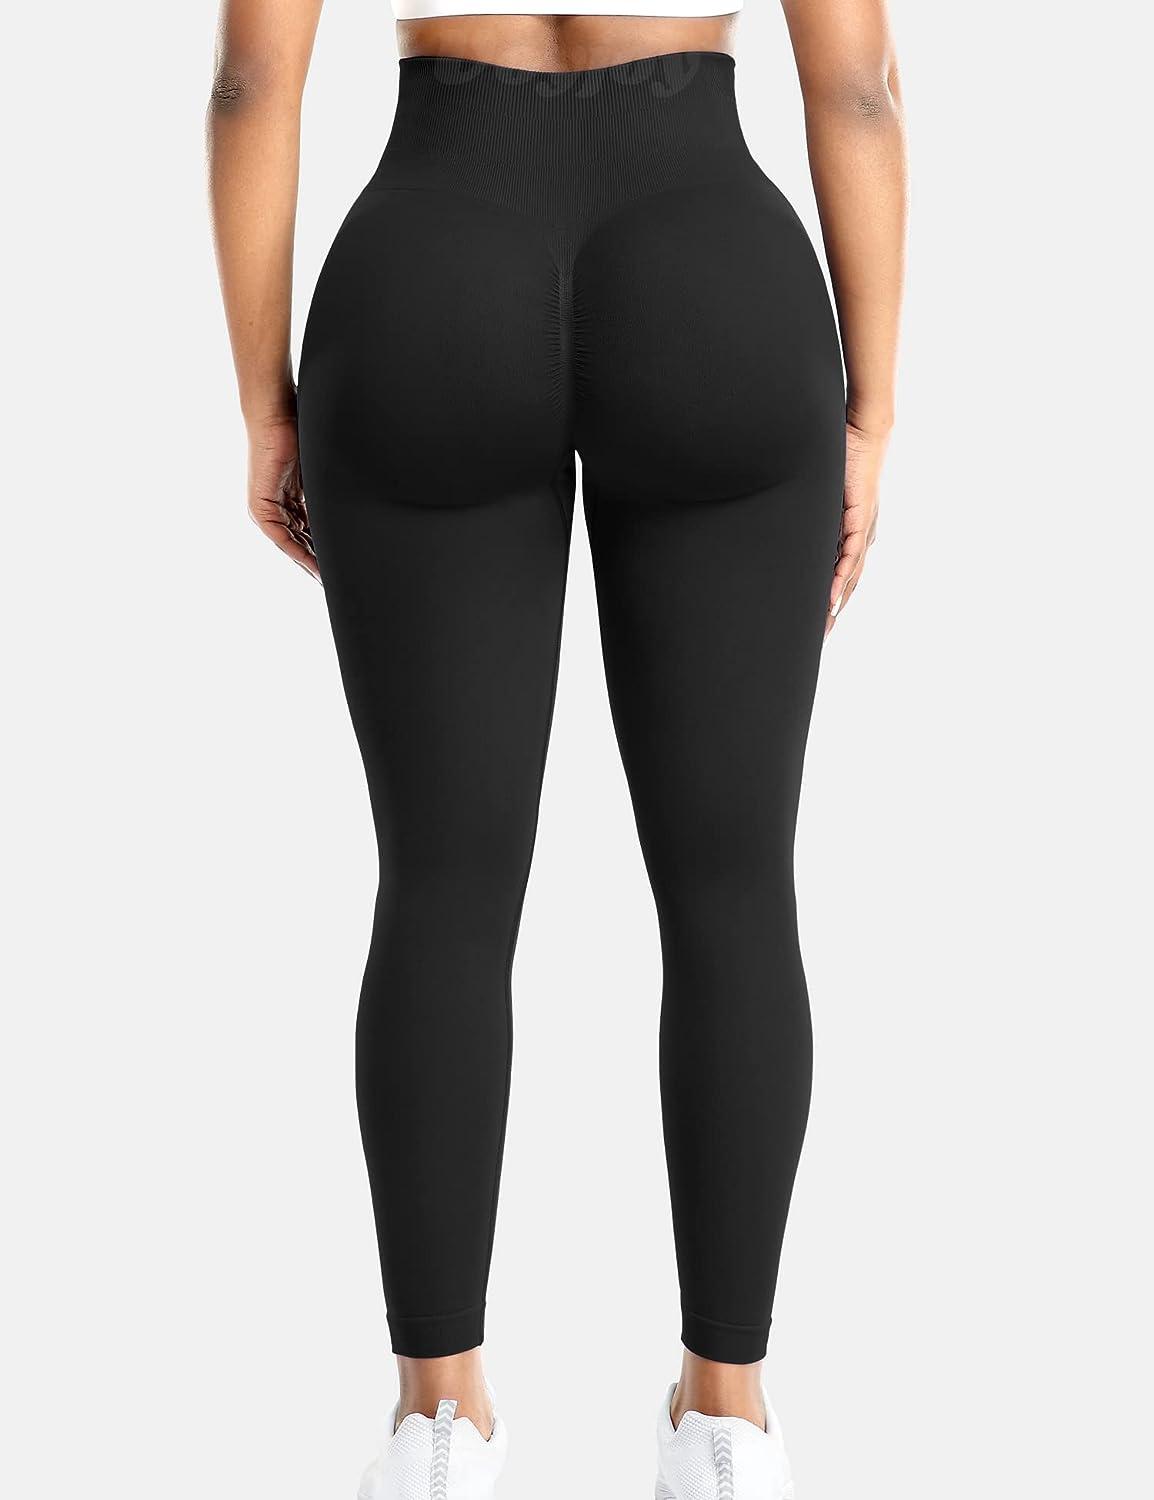 VOYJOY Women Scrunch Butt Lifting Seamless Yoga Leggings High Waist Pants  Tummy Control Vital Runched Booty Compression Tight #1 Amplify Black Small